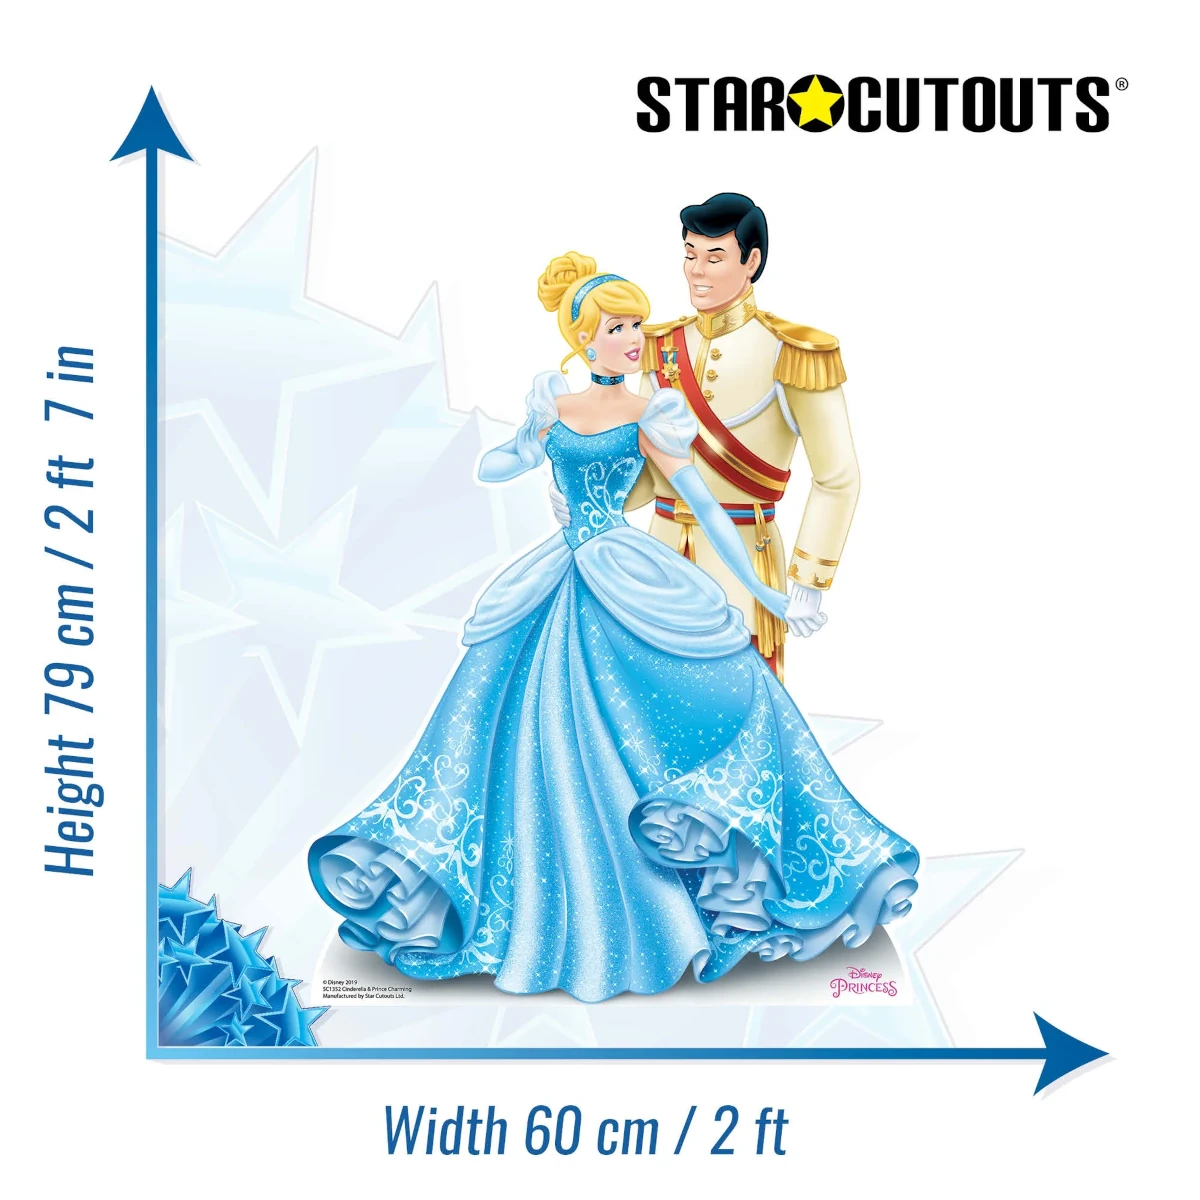 SC1352 Cinderella & Prince Charming (Disney Princess) Official Mini Cardboard Cutout Standee Size